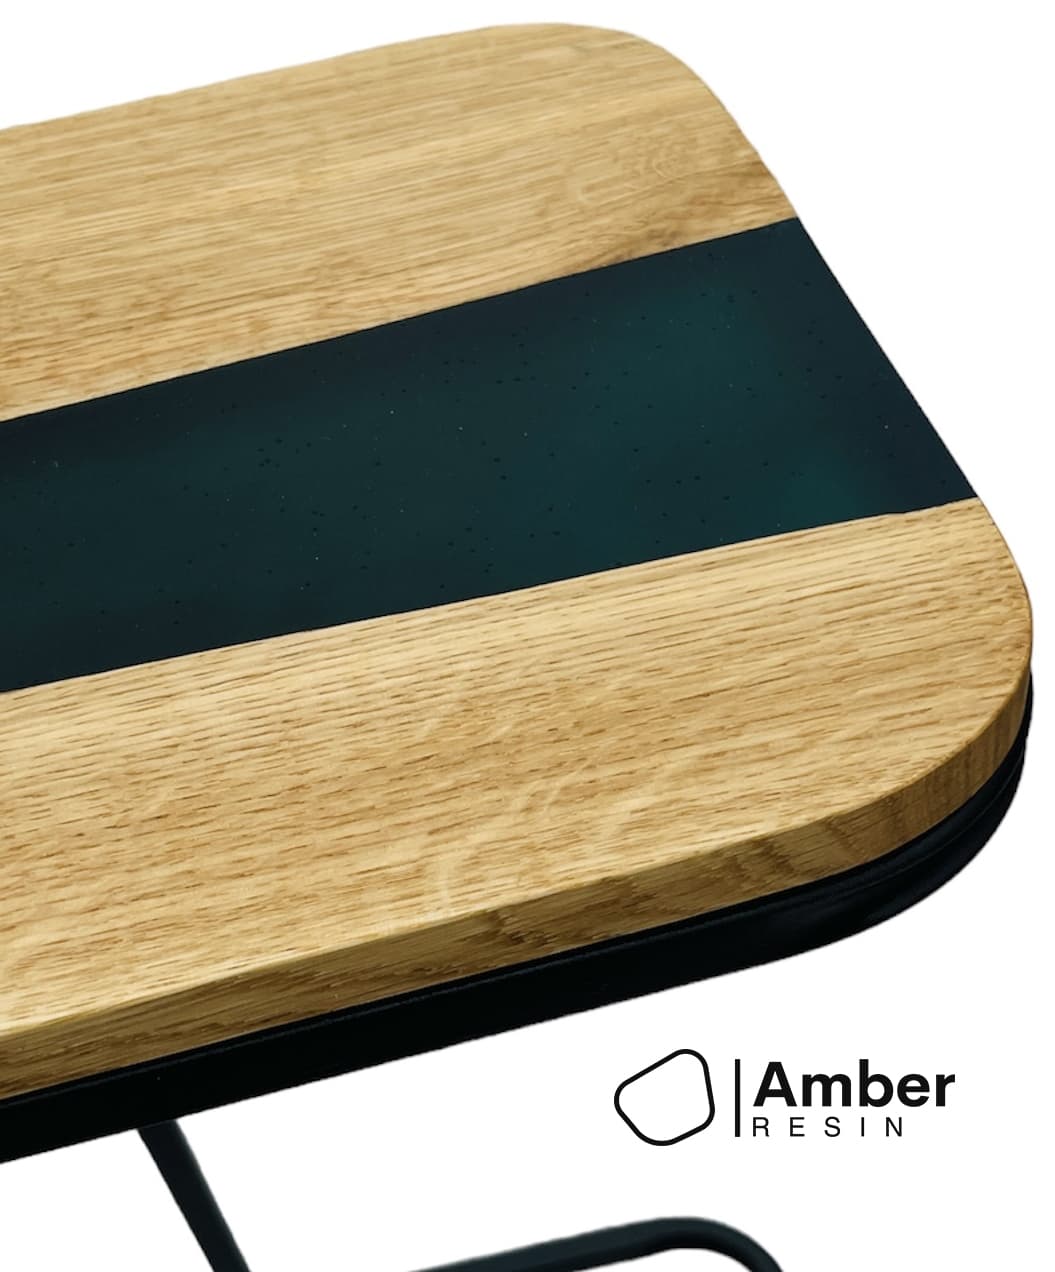 3-side-table-amber-resin.jpeg?4691f278bb444edebabc1e1d925f2986